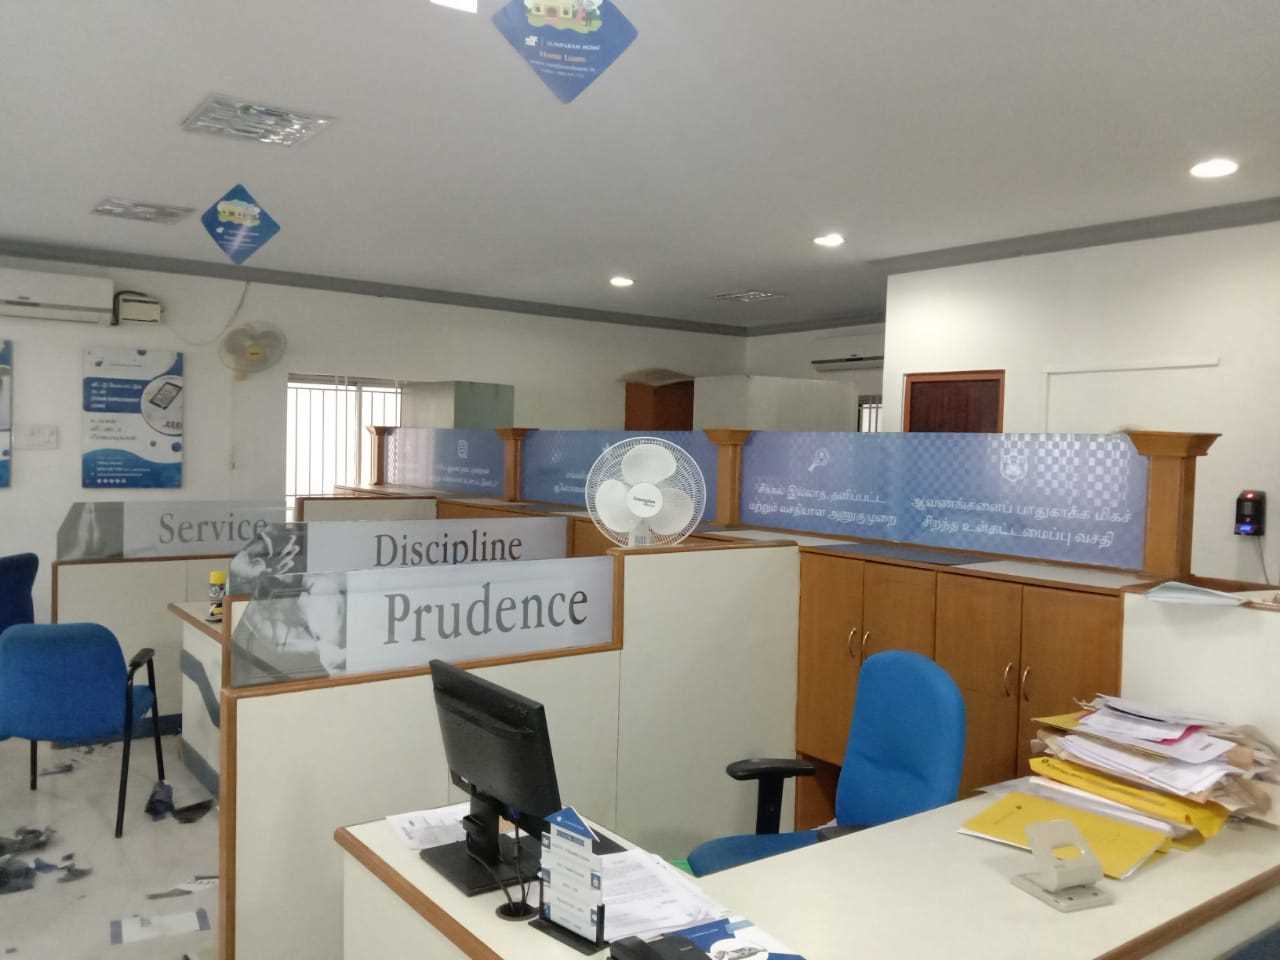 Sundaram Home Finance Limited: Best Home Loan Provider in LIC Colony, Salem